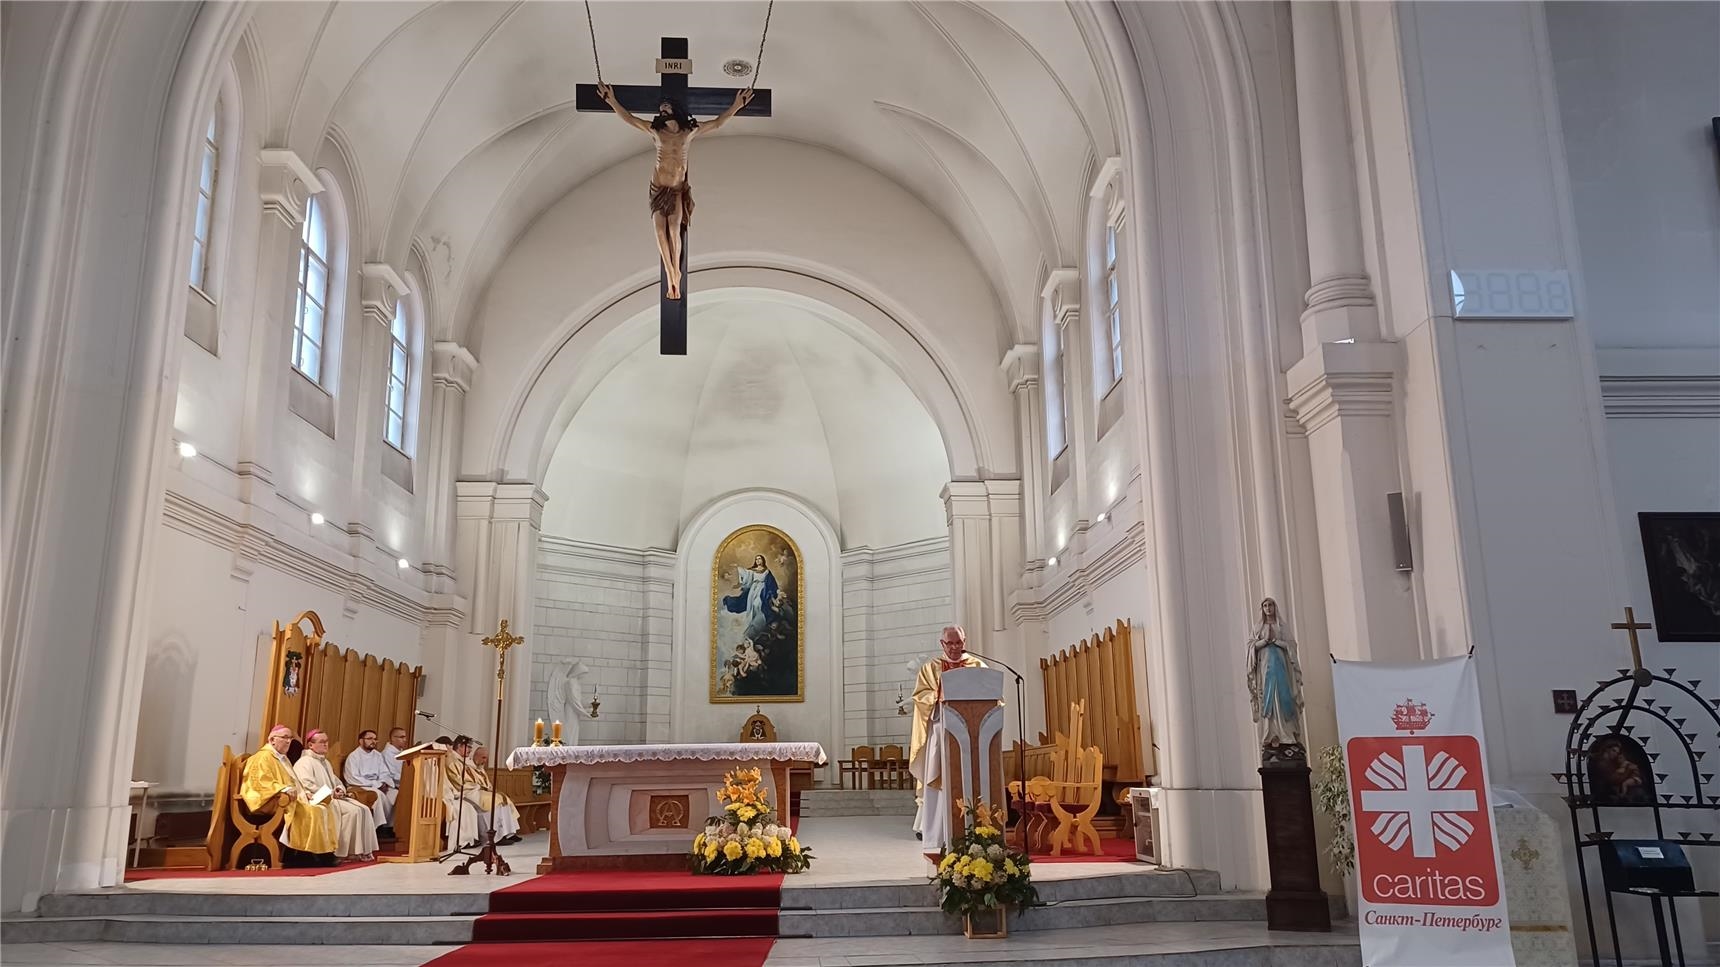 30 Jahre Caritas St. Petersburg Festgottesdienst 